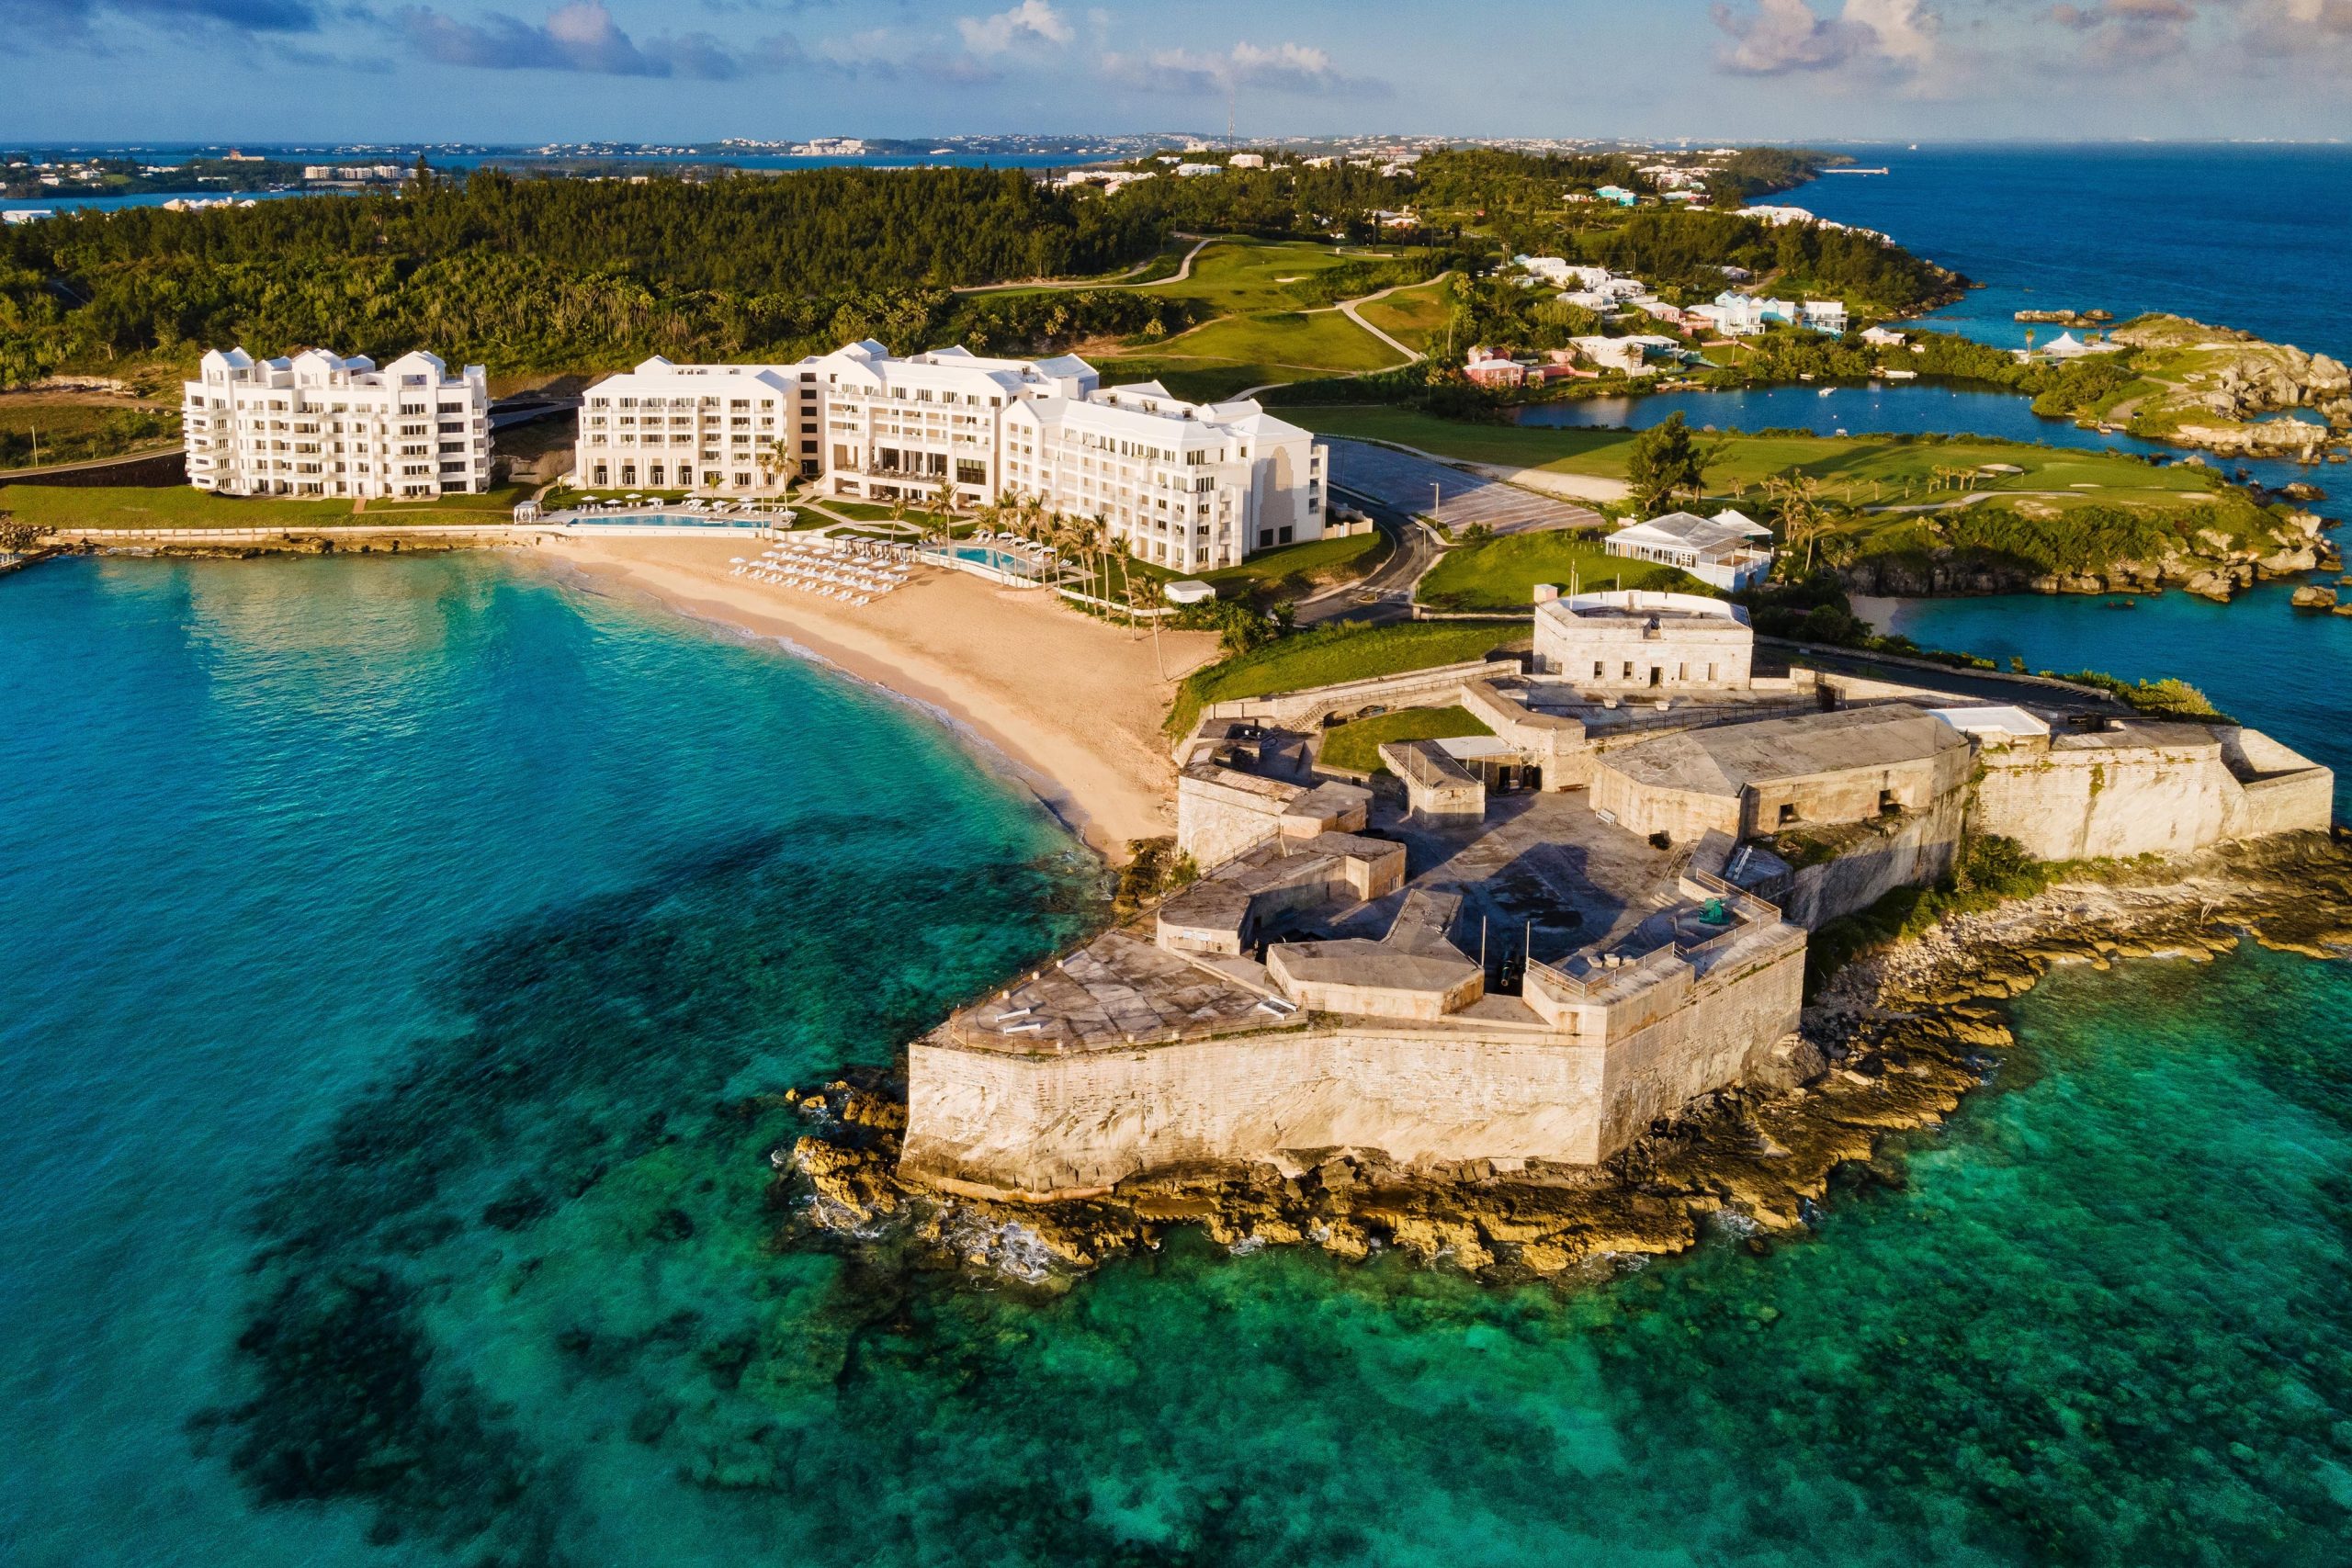 An exterior view of the St. Regis Bermuda Resort